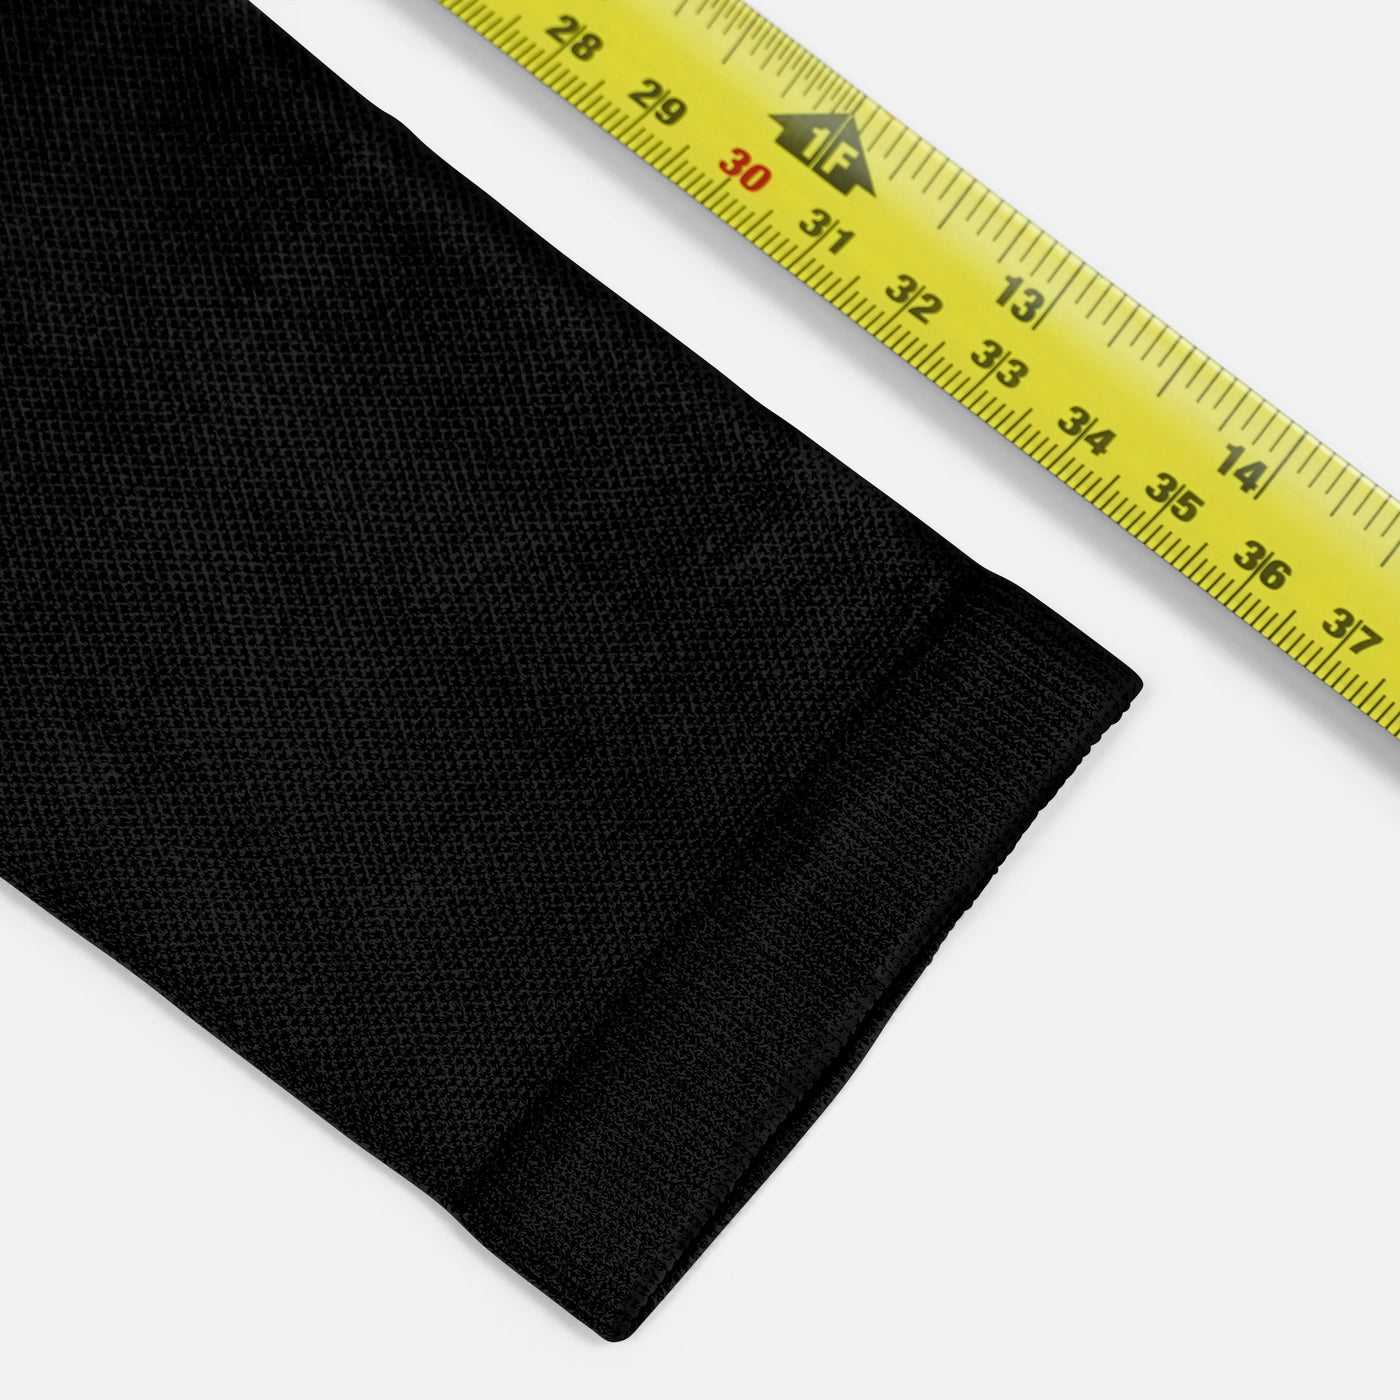 Basic Black One Size Fits All Basketball Arm Sleeve